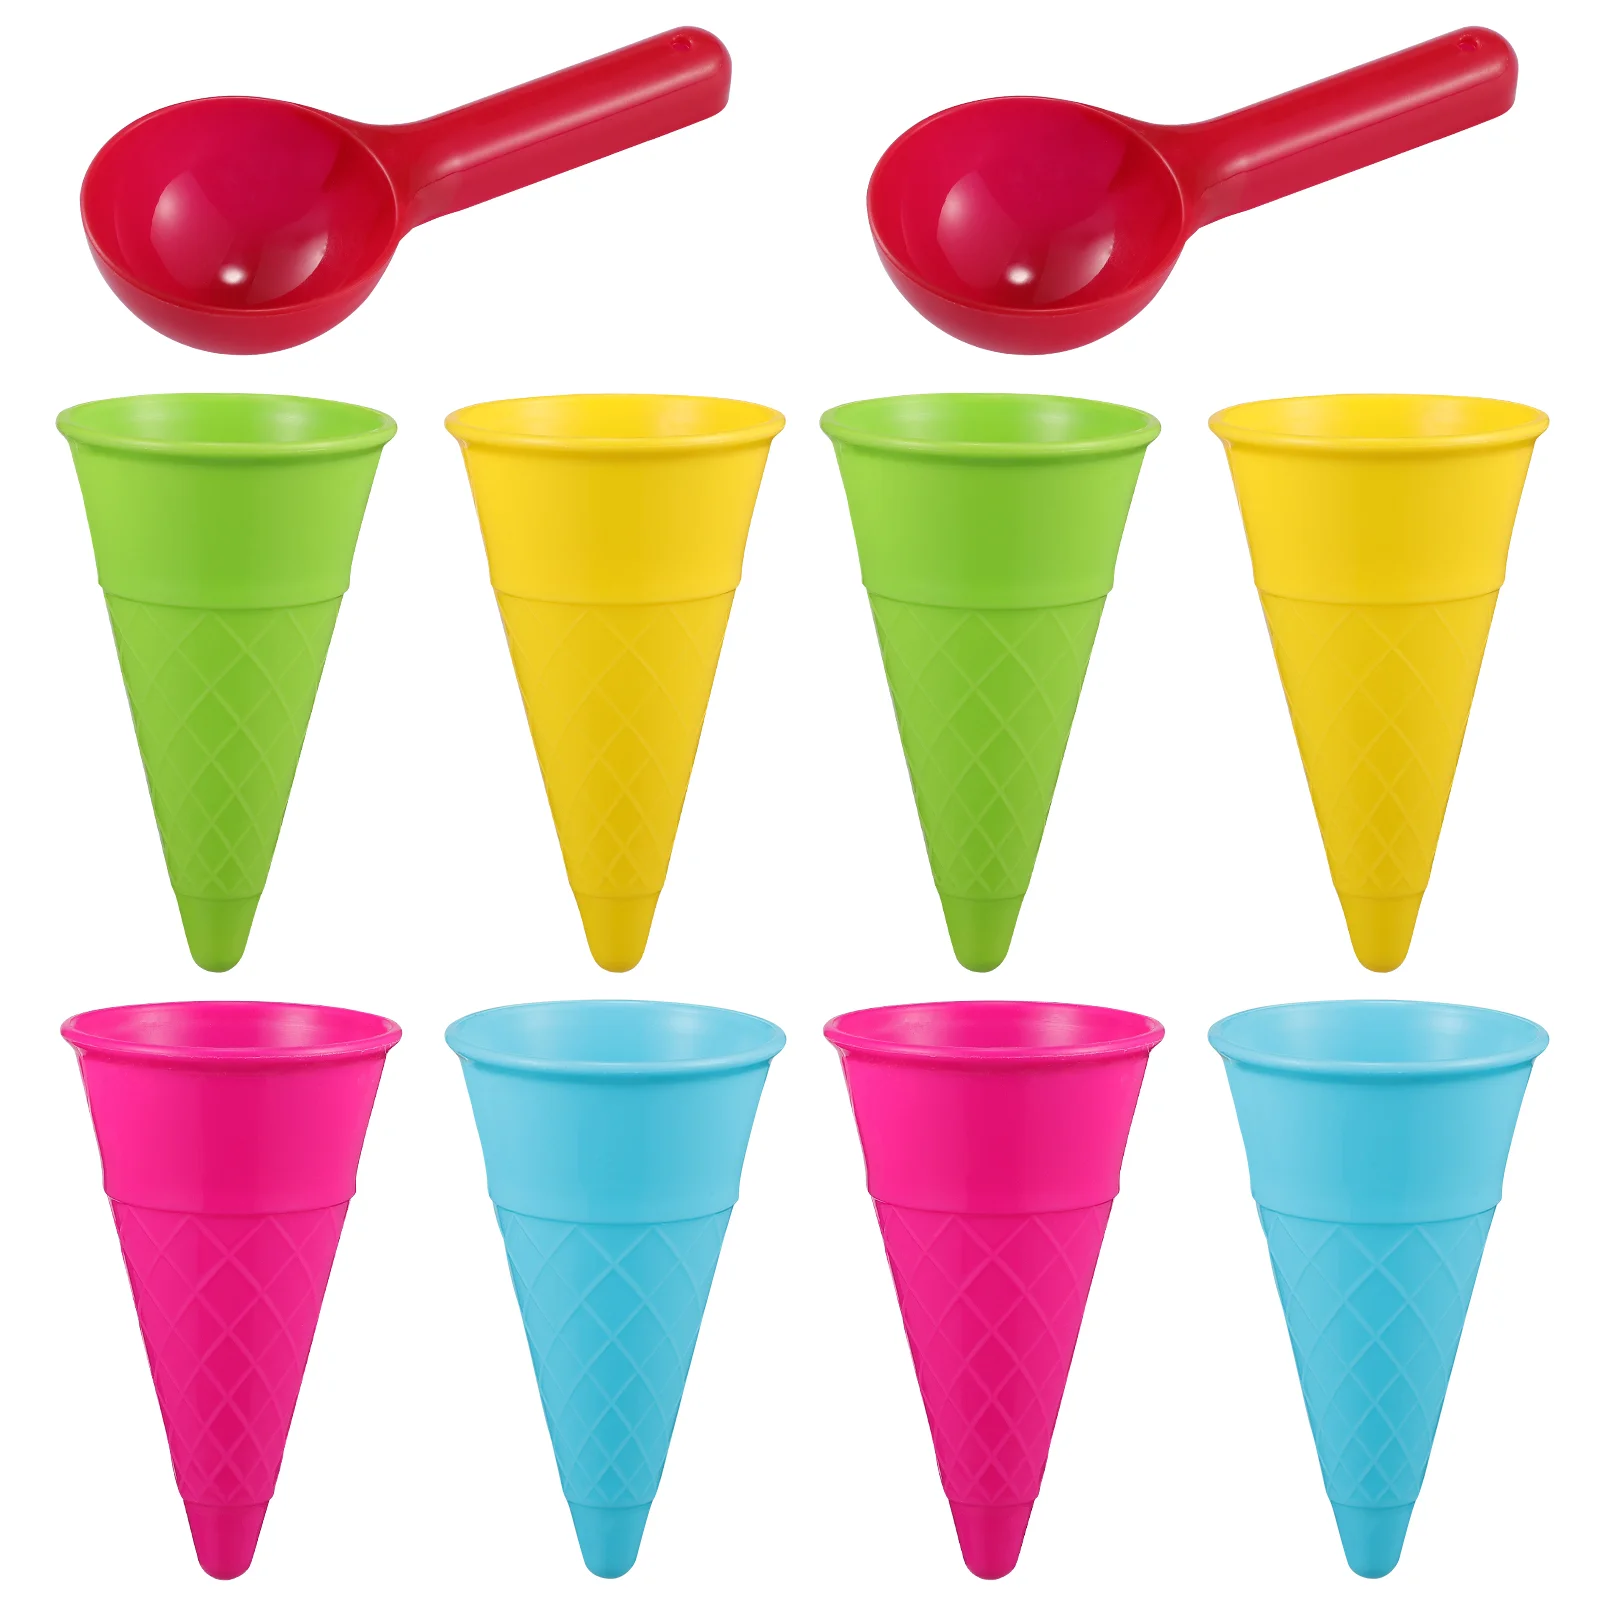 

TOYANDONA 2 Sets Ice Cream Cones Scoop Outdoor Beach Toy Set for Toddlers Kids (Random Color)